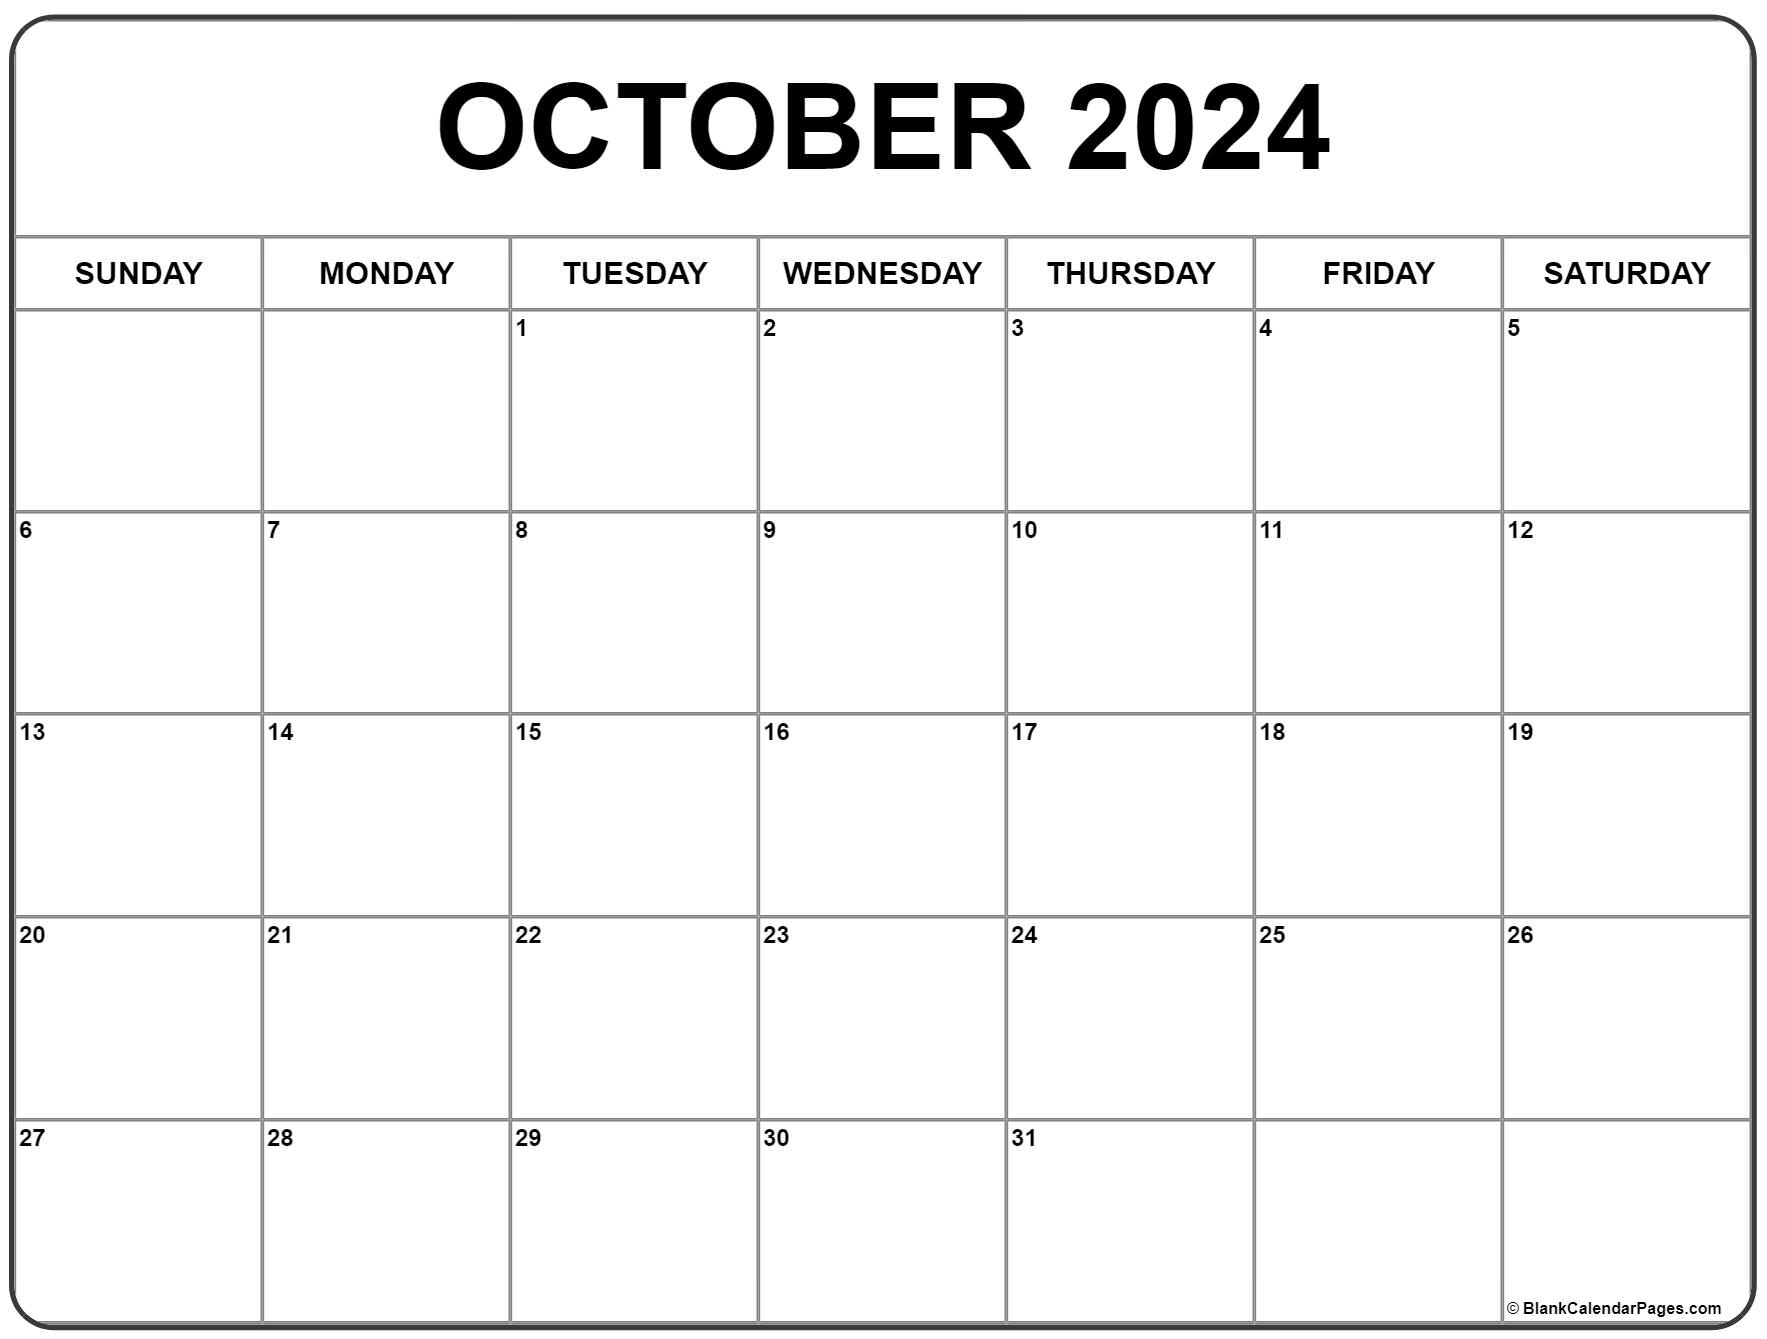 October 2024 Calendar | Free Printable Calendar for Free Printable Calendar 2024 October